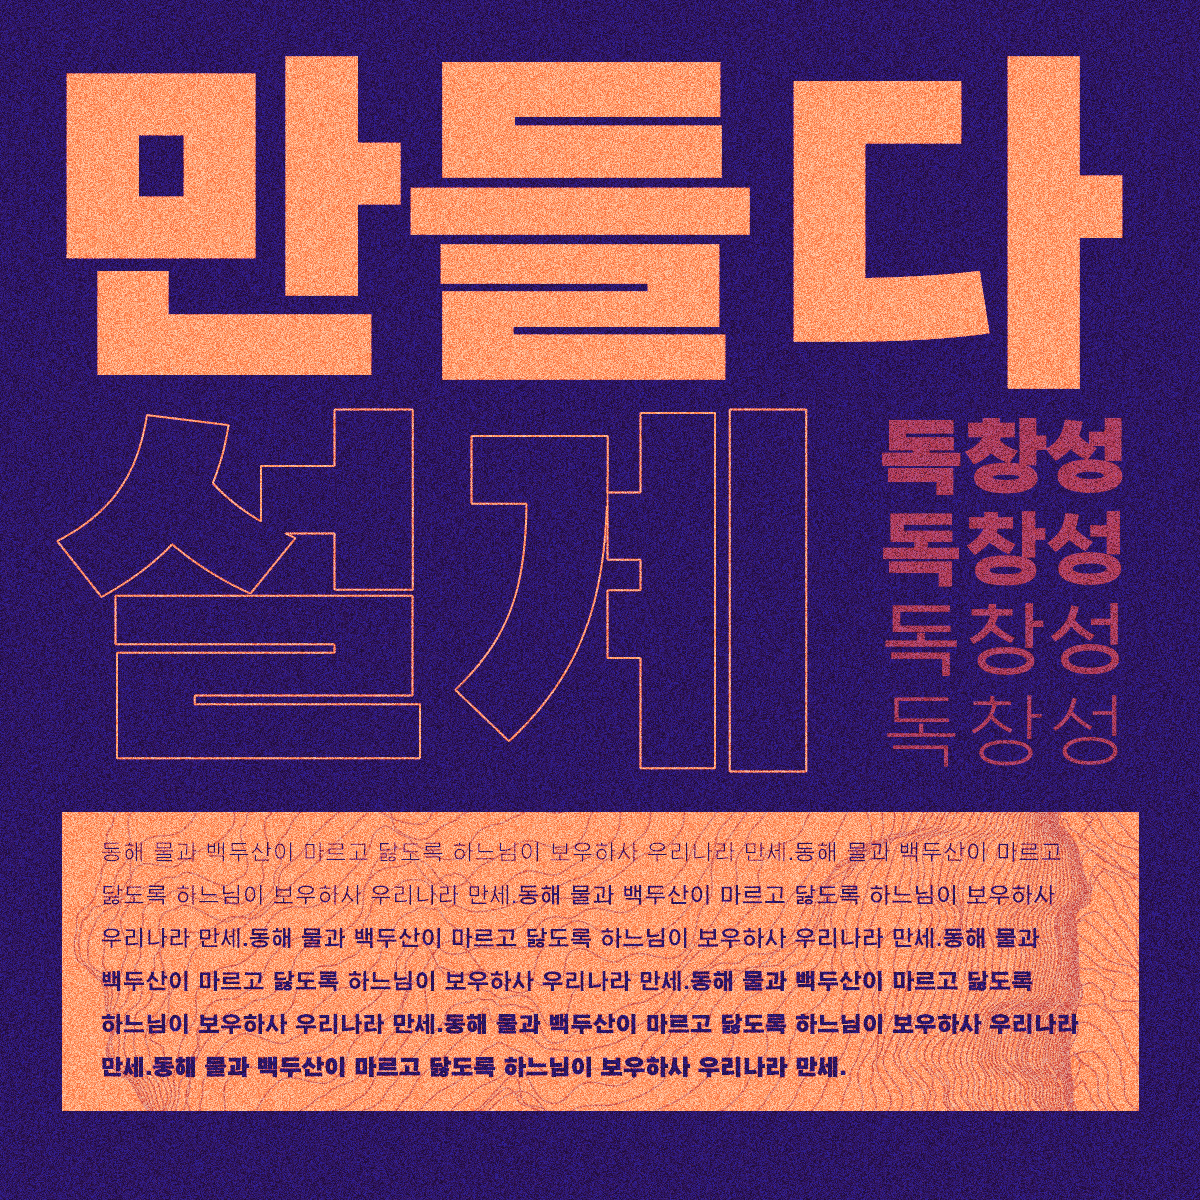 asian font chinese CJK font japanese korean Typeface typography  